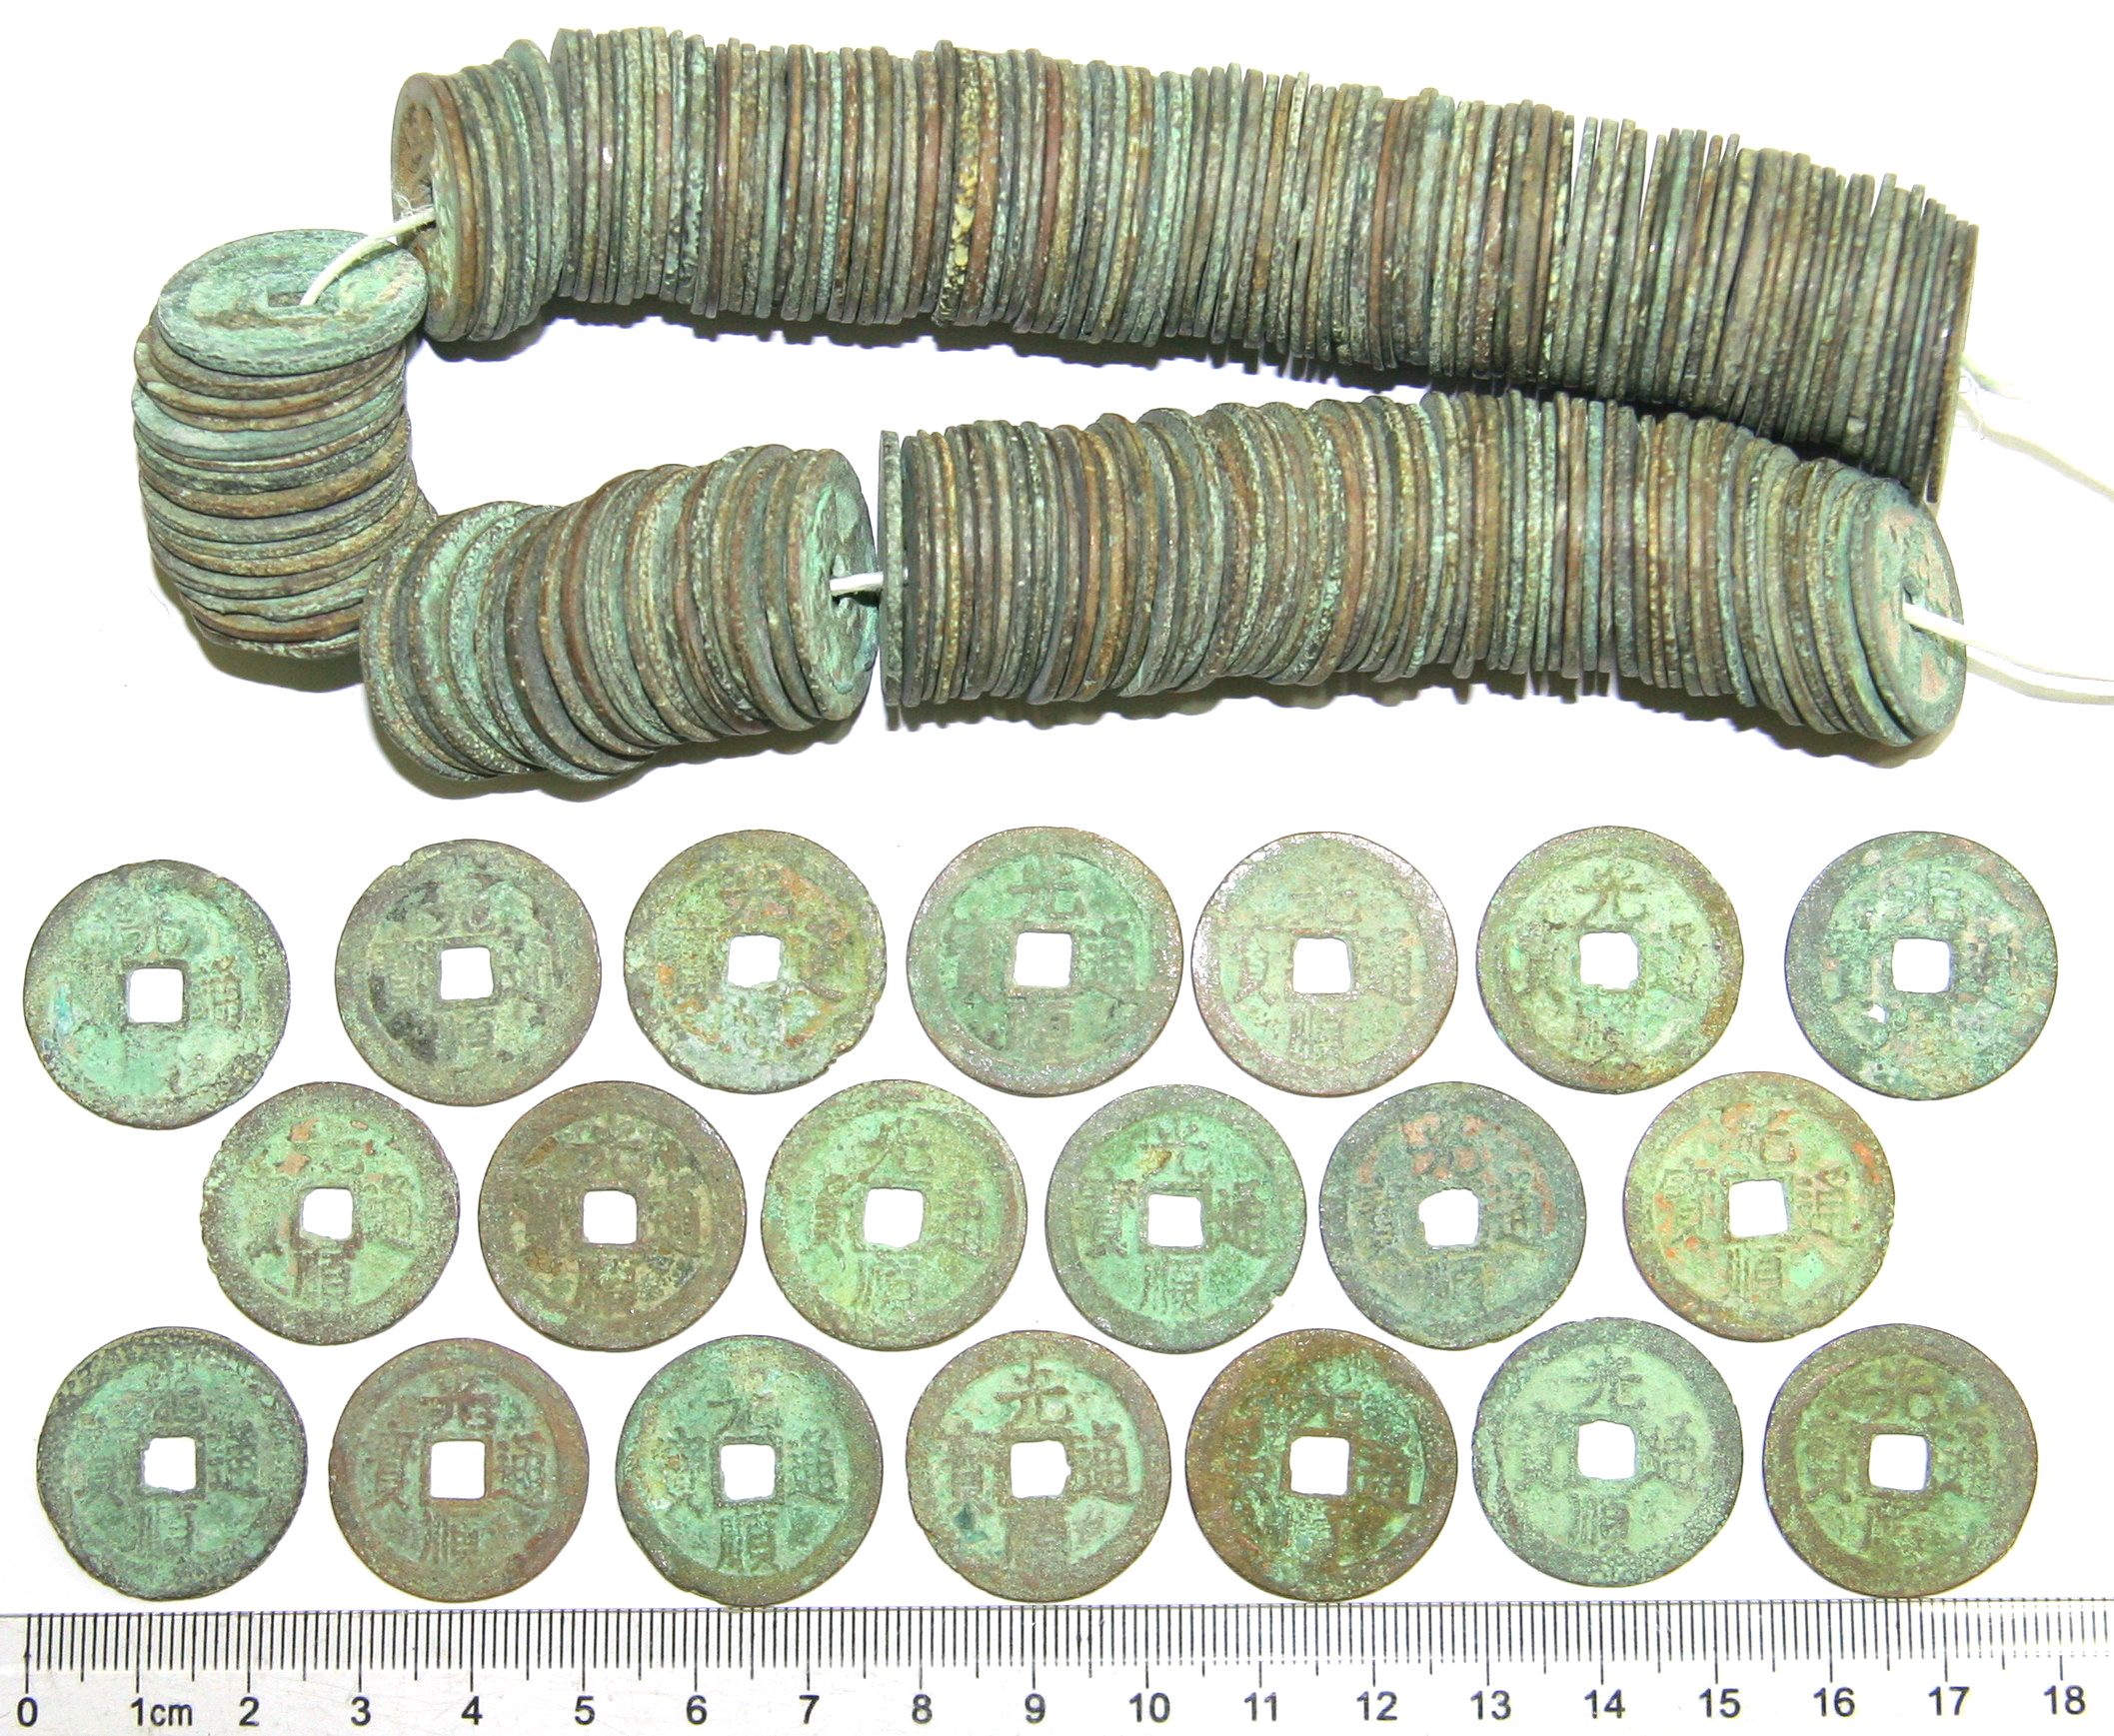 V2082, Quang-Thuan Thong-Bao (Guang-Shun Tong-Bao), 10 Pcs Wholesale, AD 1460